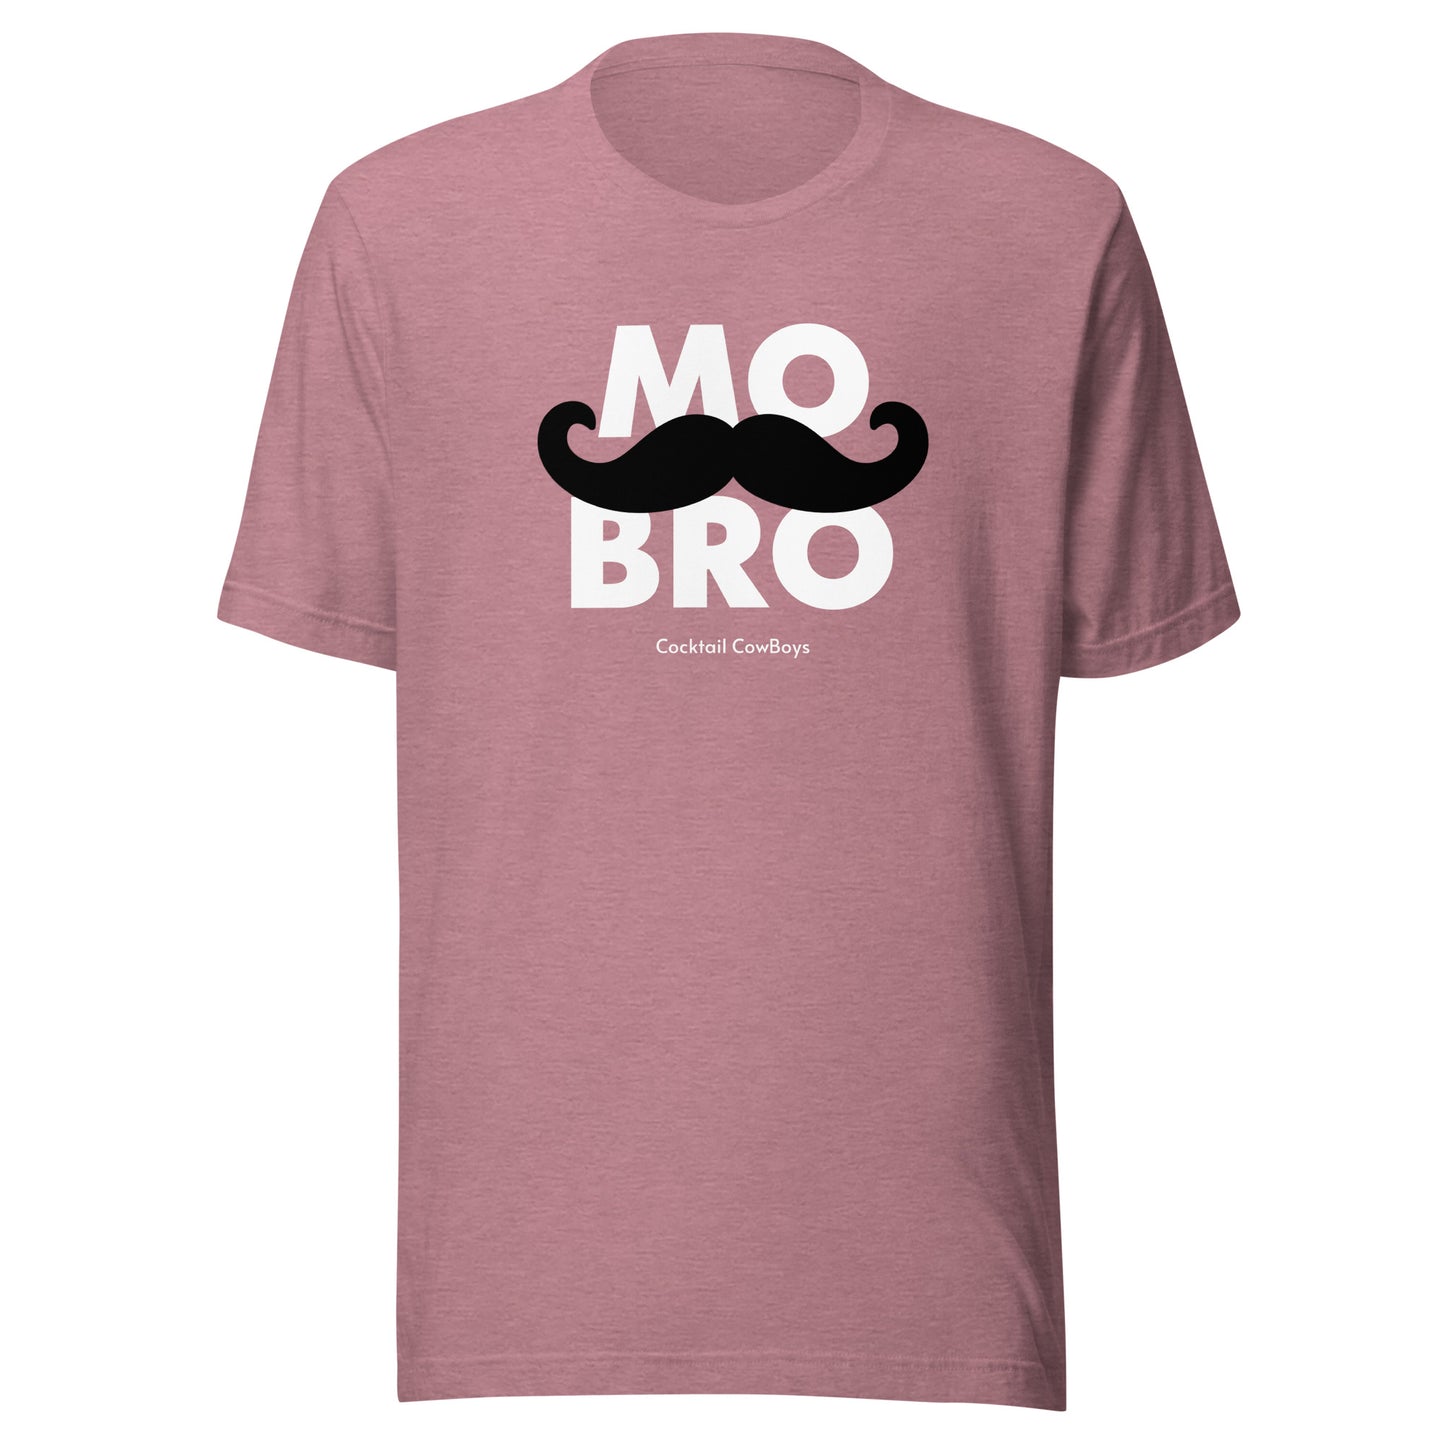 MO-BRO Cocktail CowBoys Unisex t-shirt